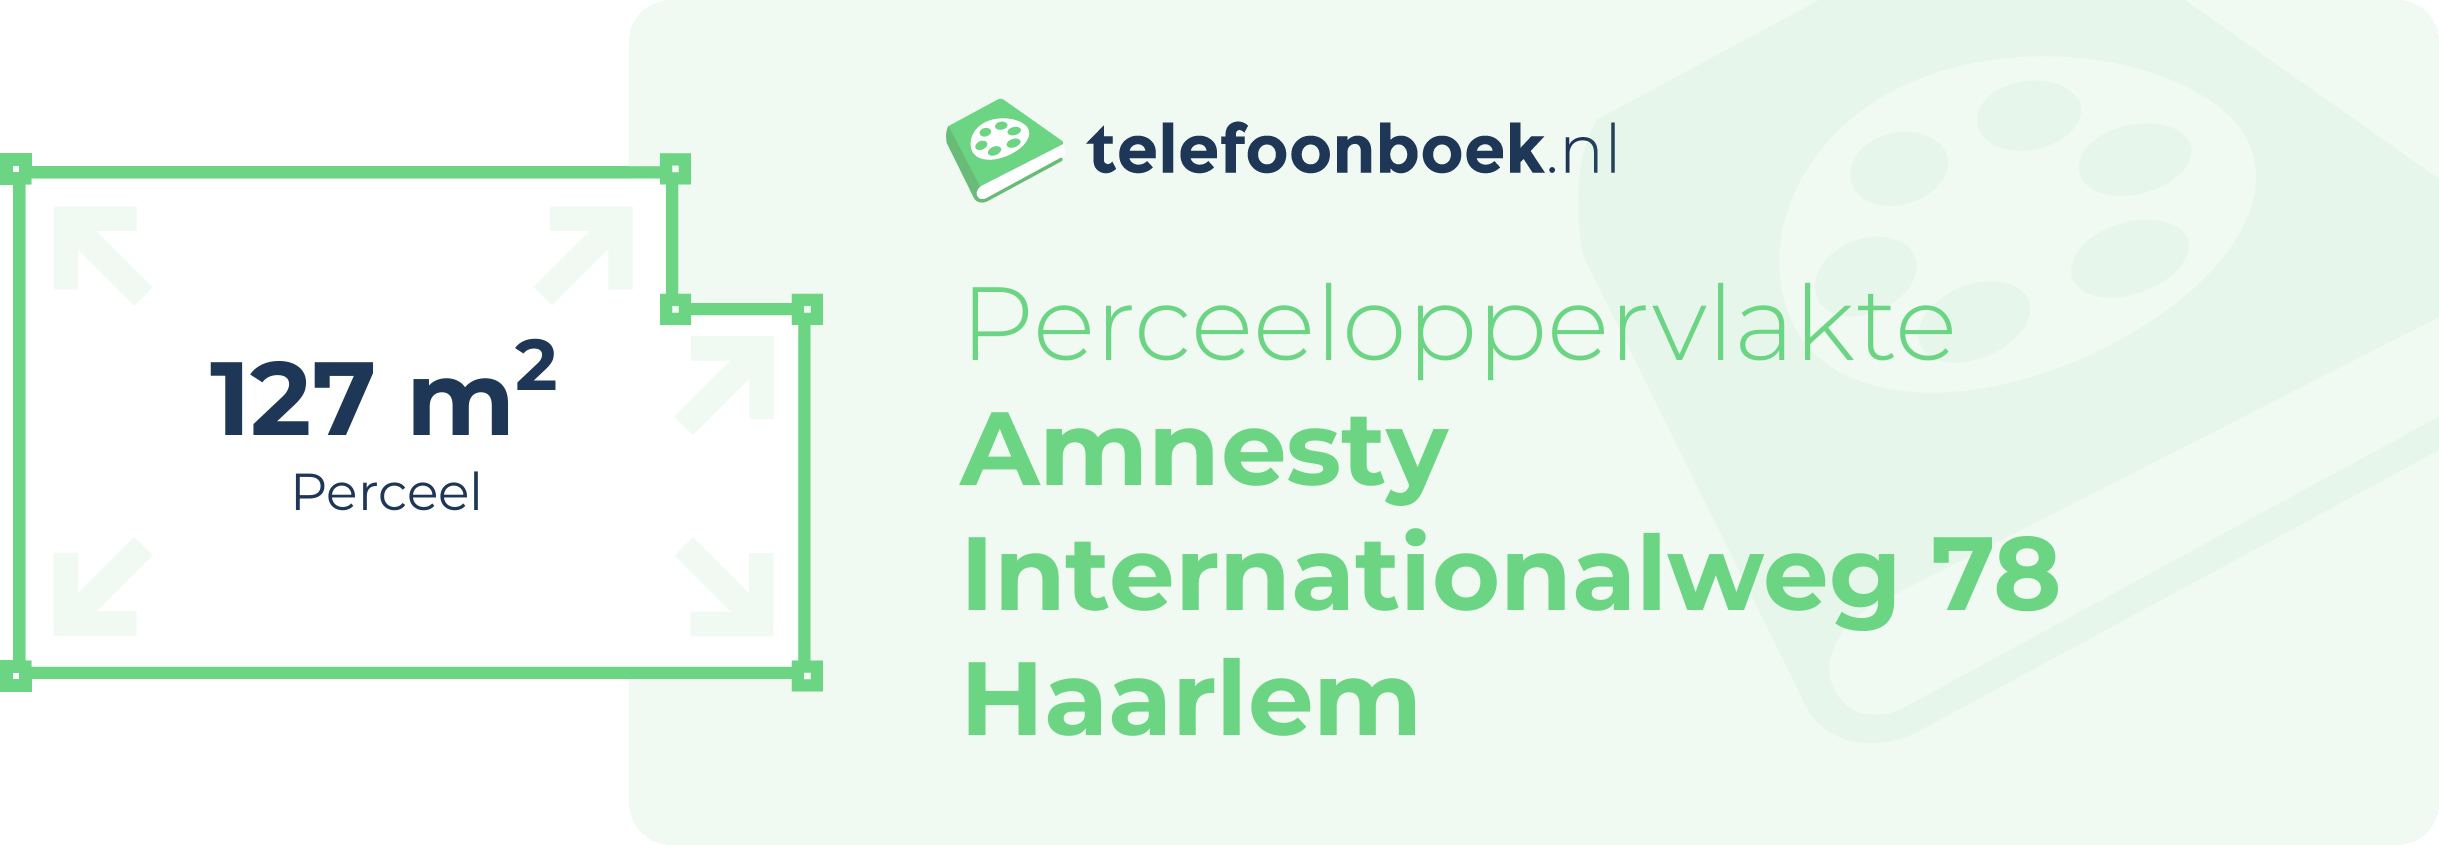 Perceeloppervlakte Amnesty Internationalweg 78 Haarlem